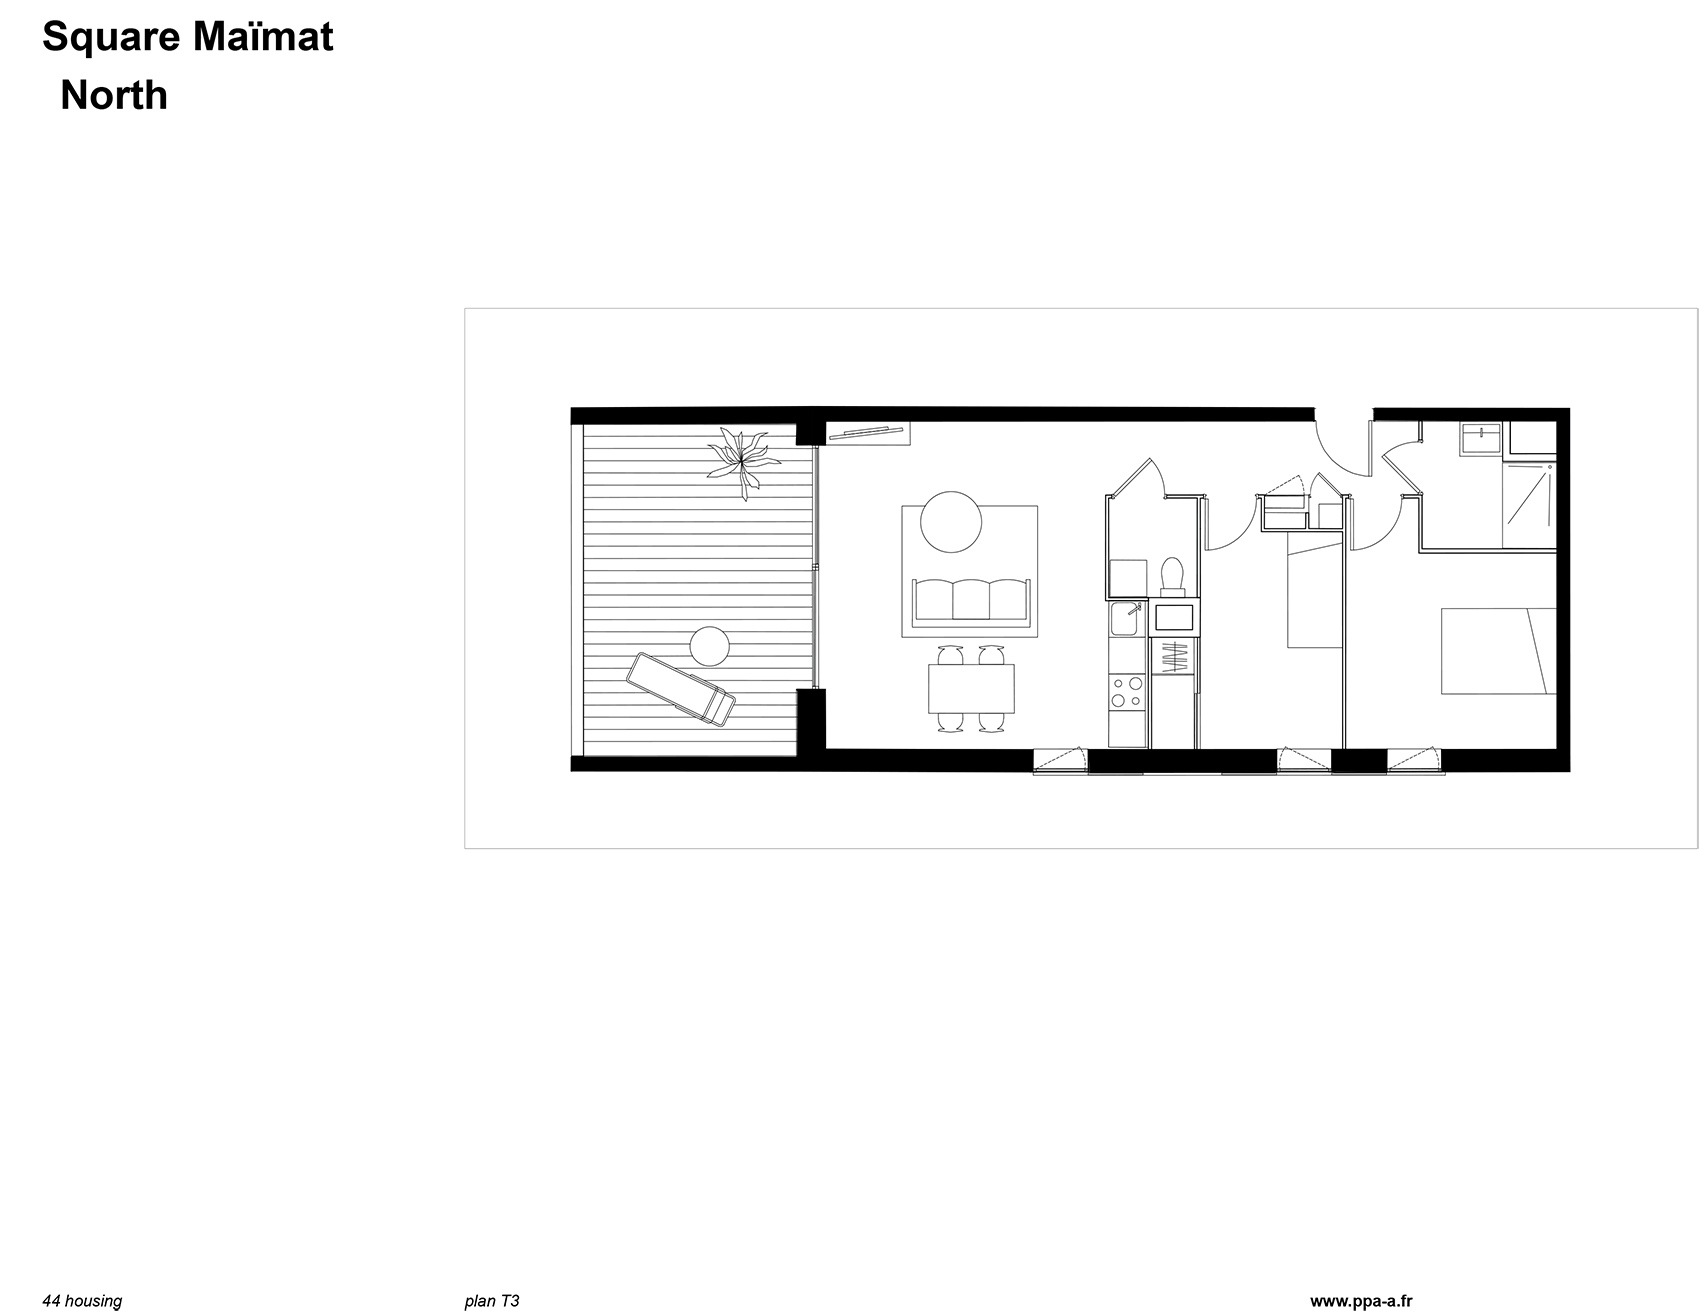 Square Maïmat住宅区更新，法国/释放公共空间，连接社区居民-116